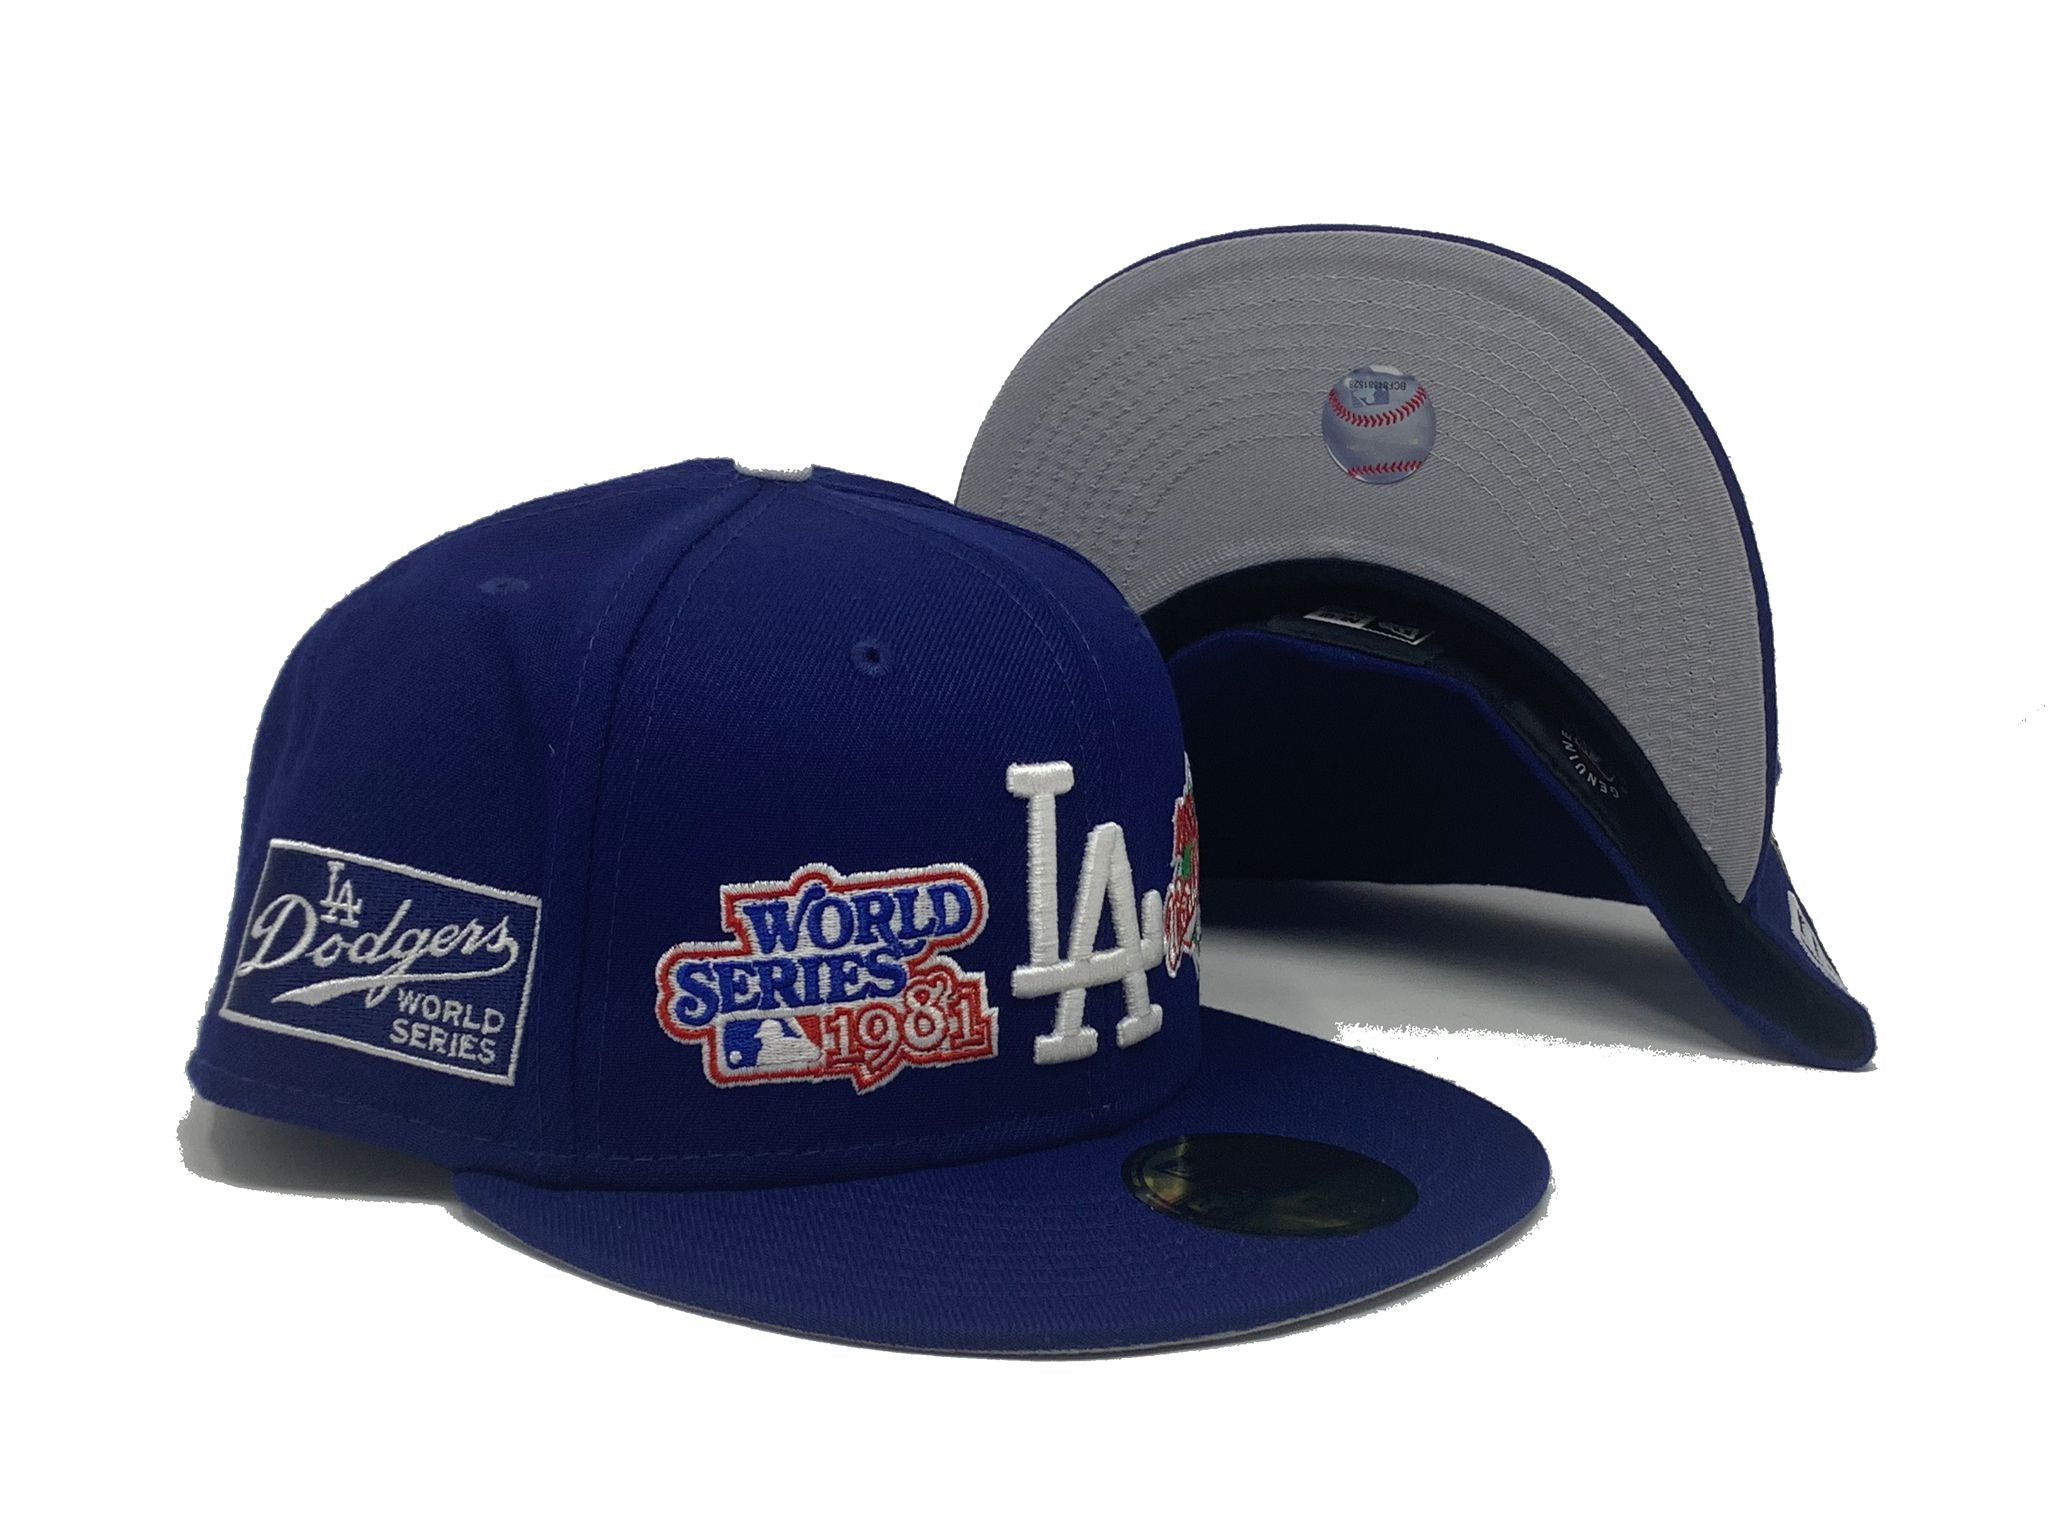 New Era L.A Dodgers Blue Fitted Hat MLB World Series Champion